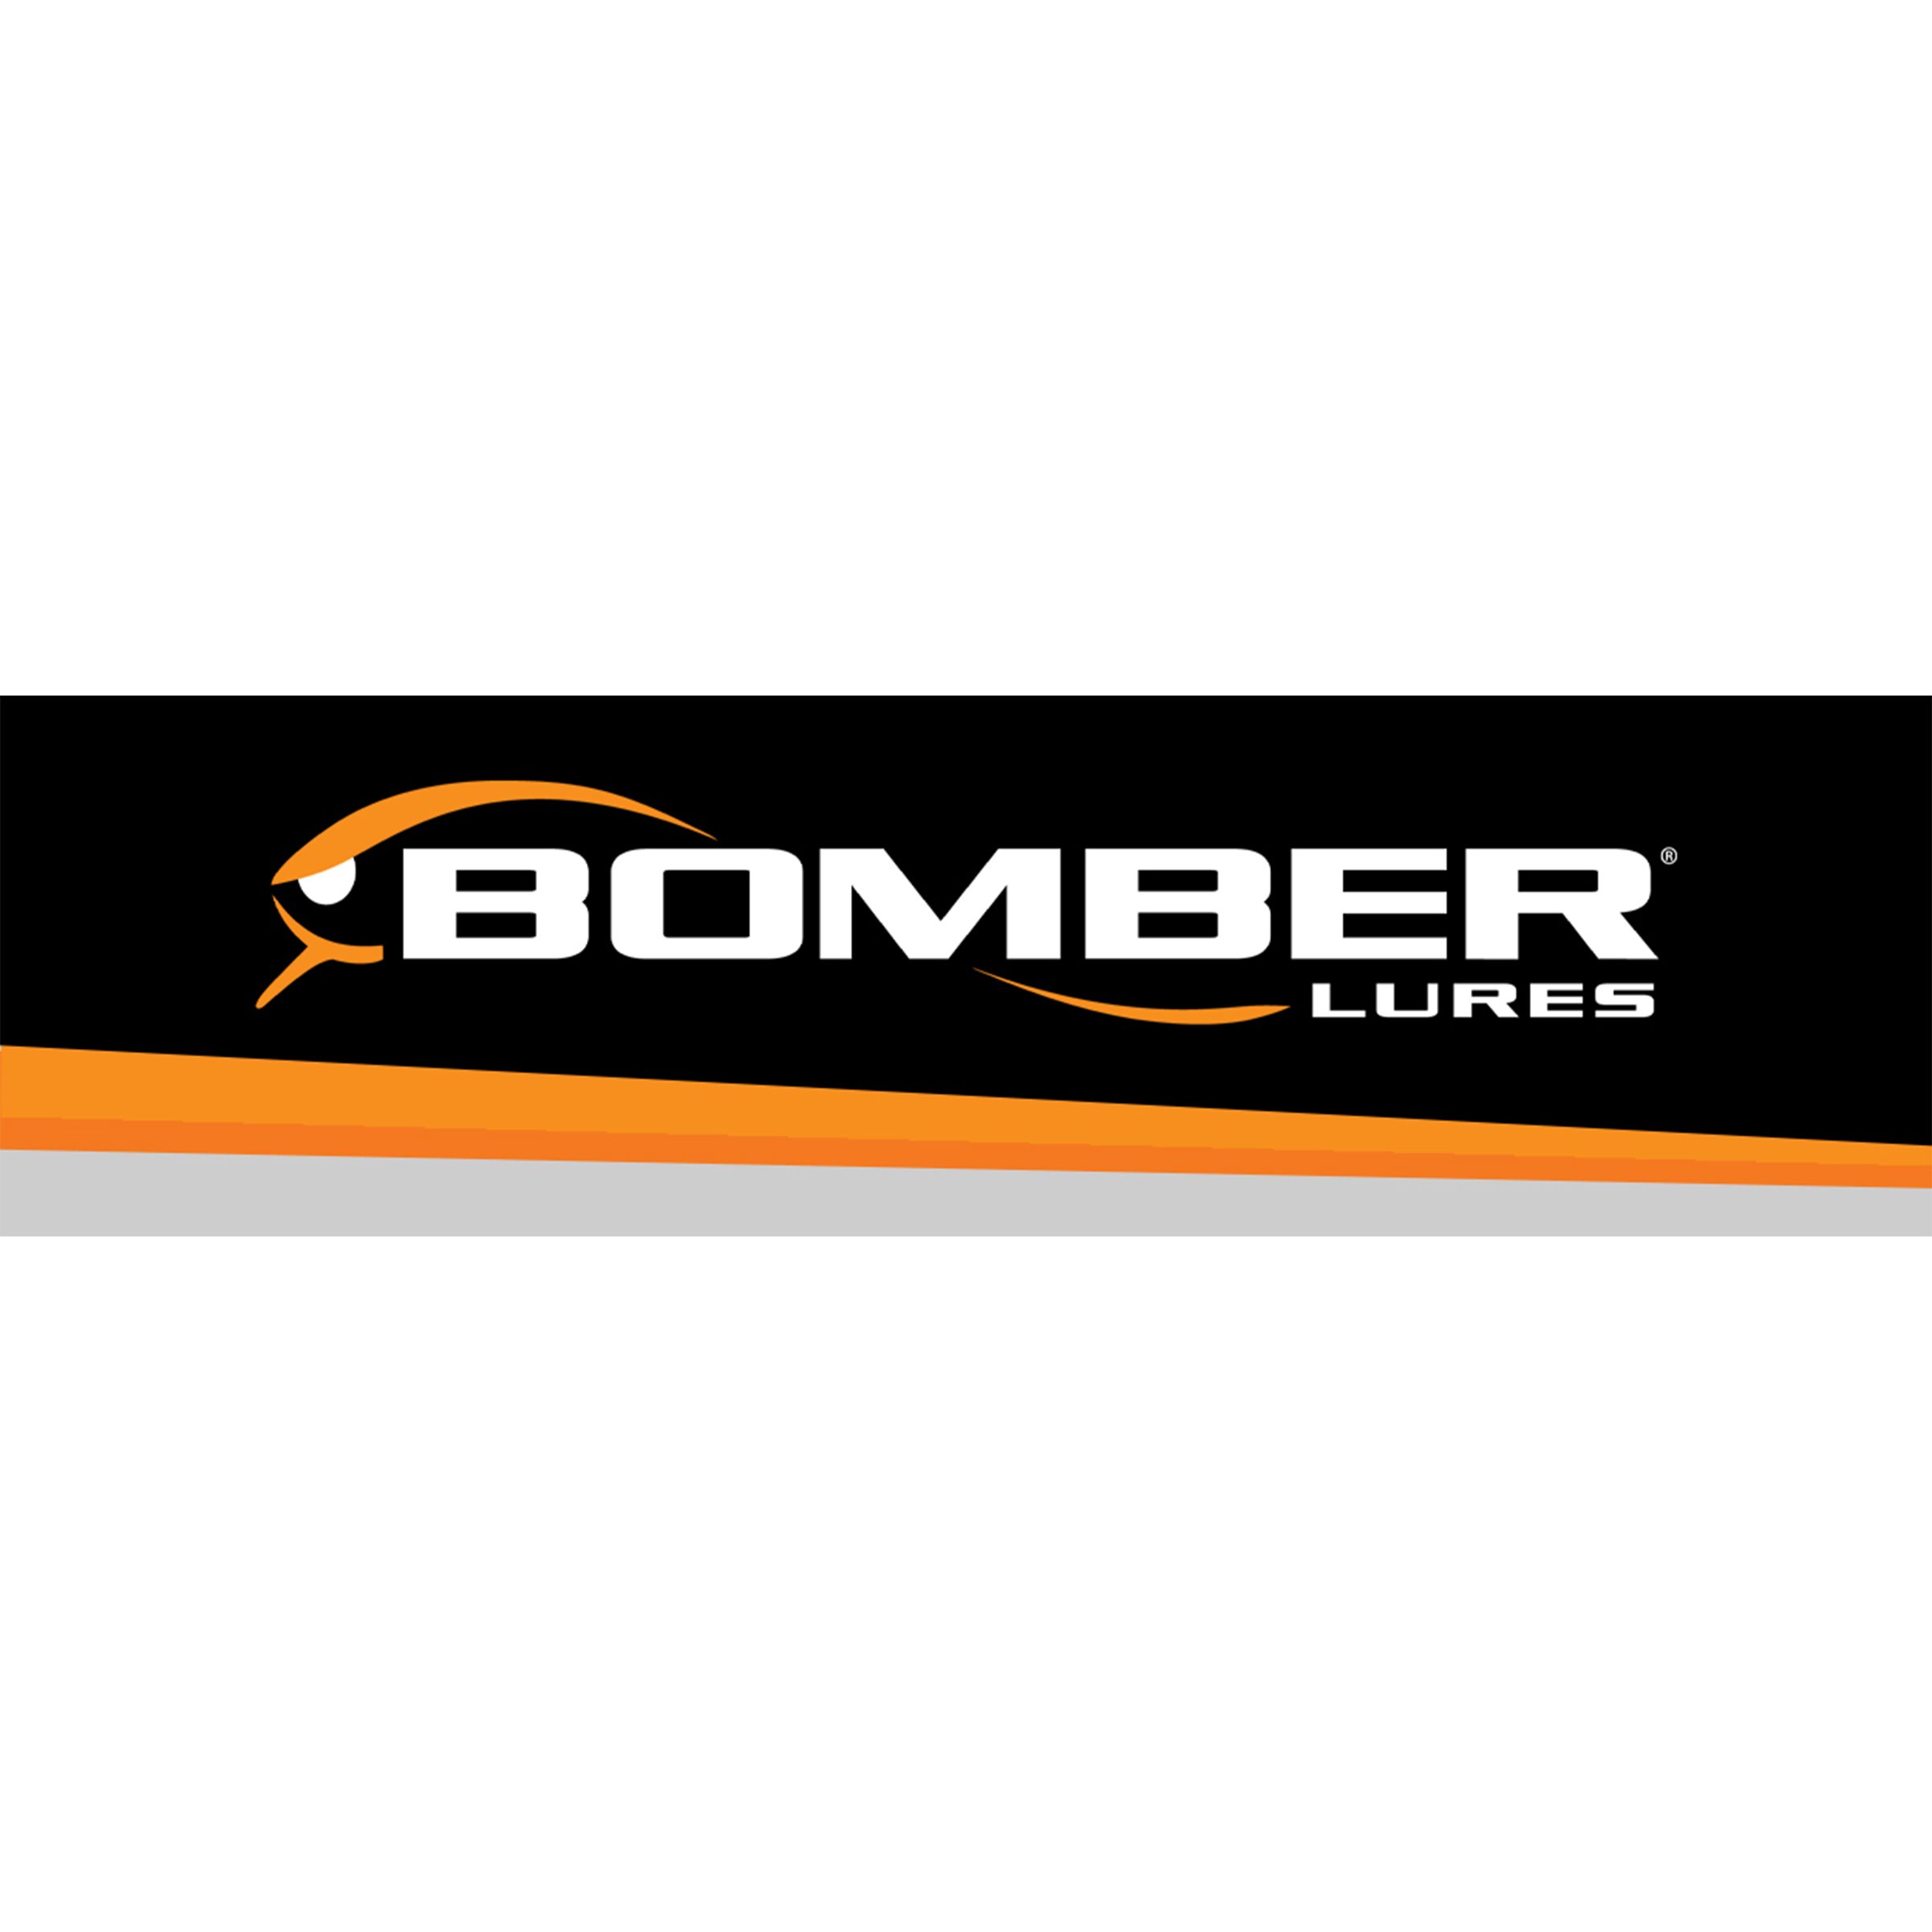 A_Bomber